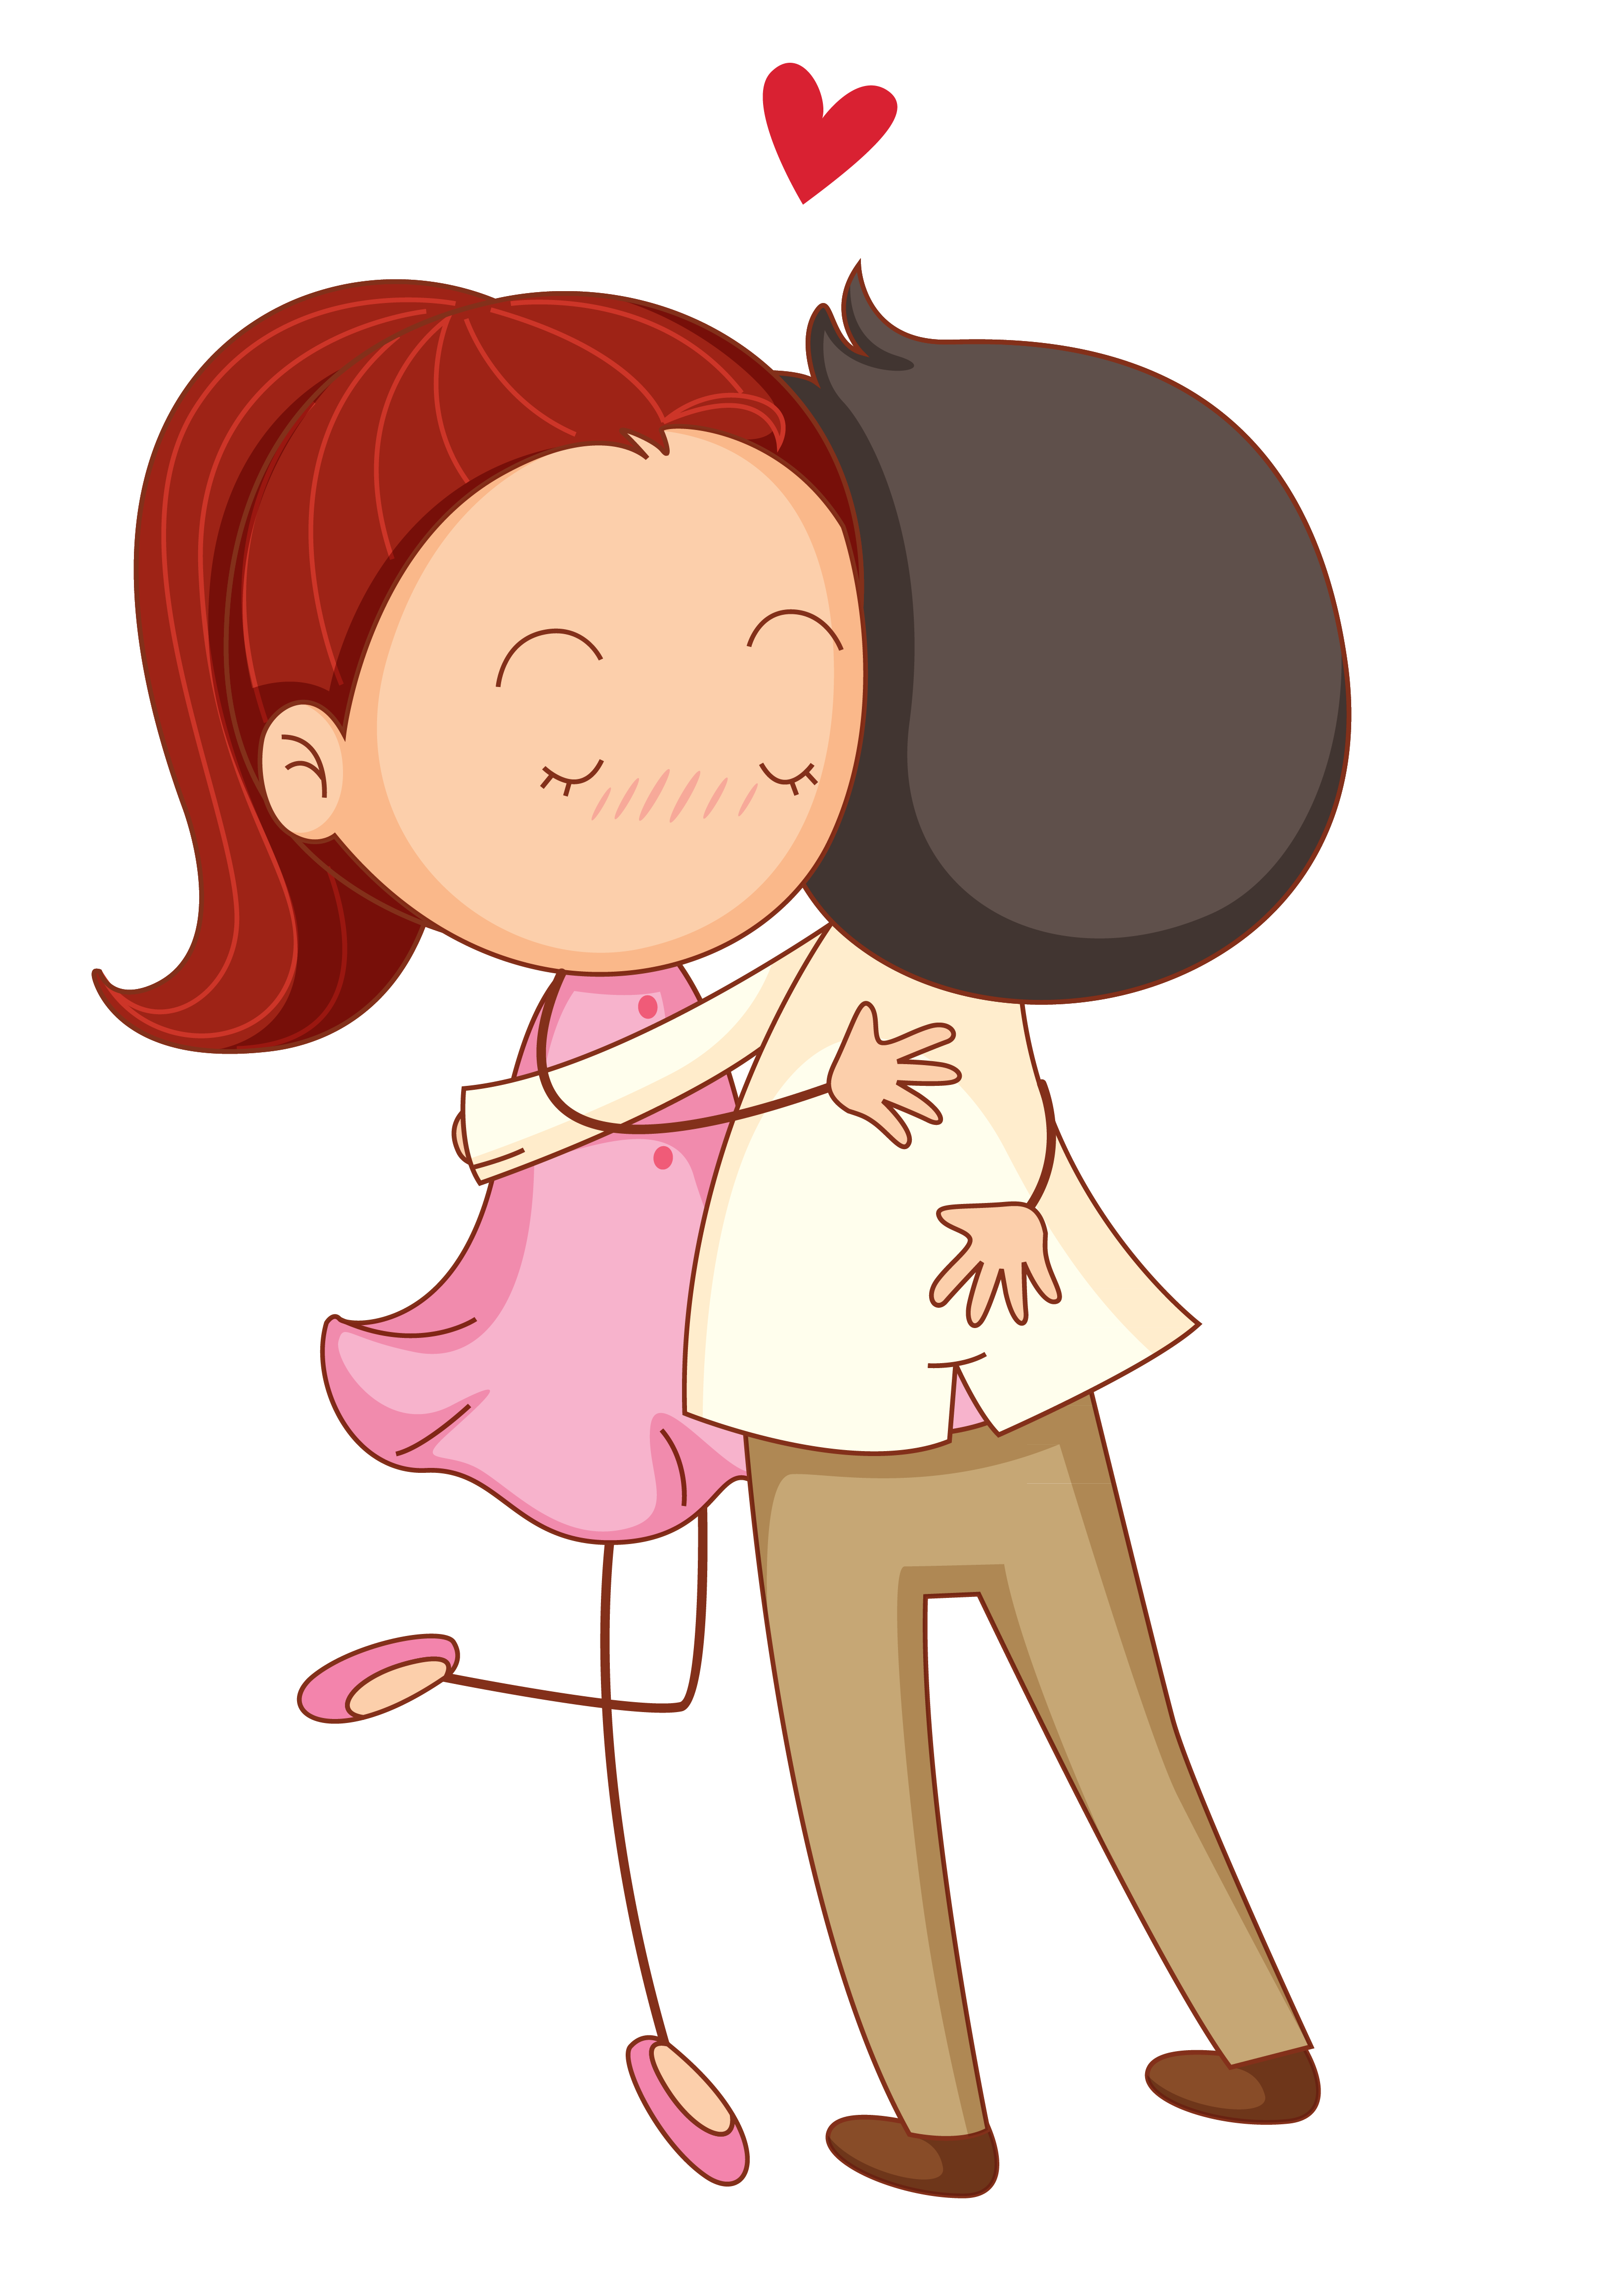 Romance Couple Hug Love Cartoon PNG Image High Quality Clipart.